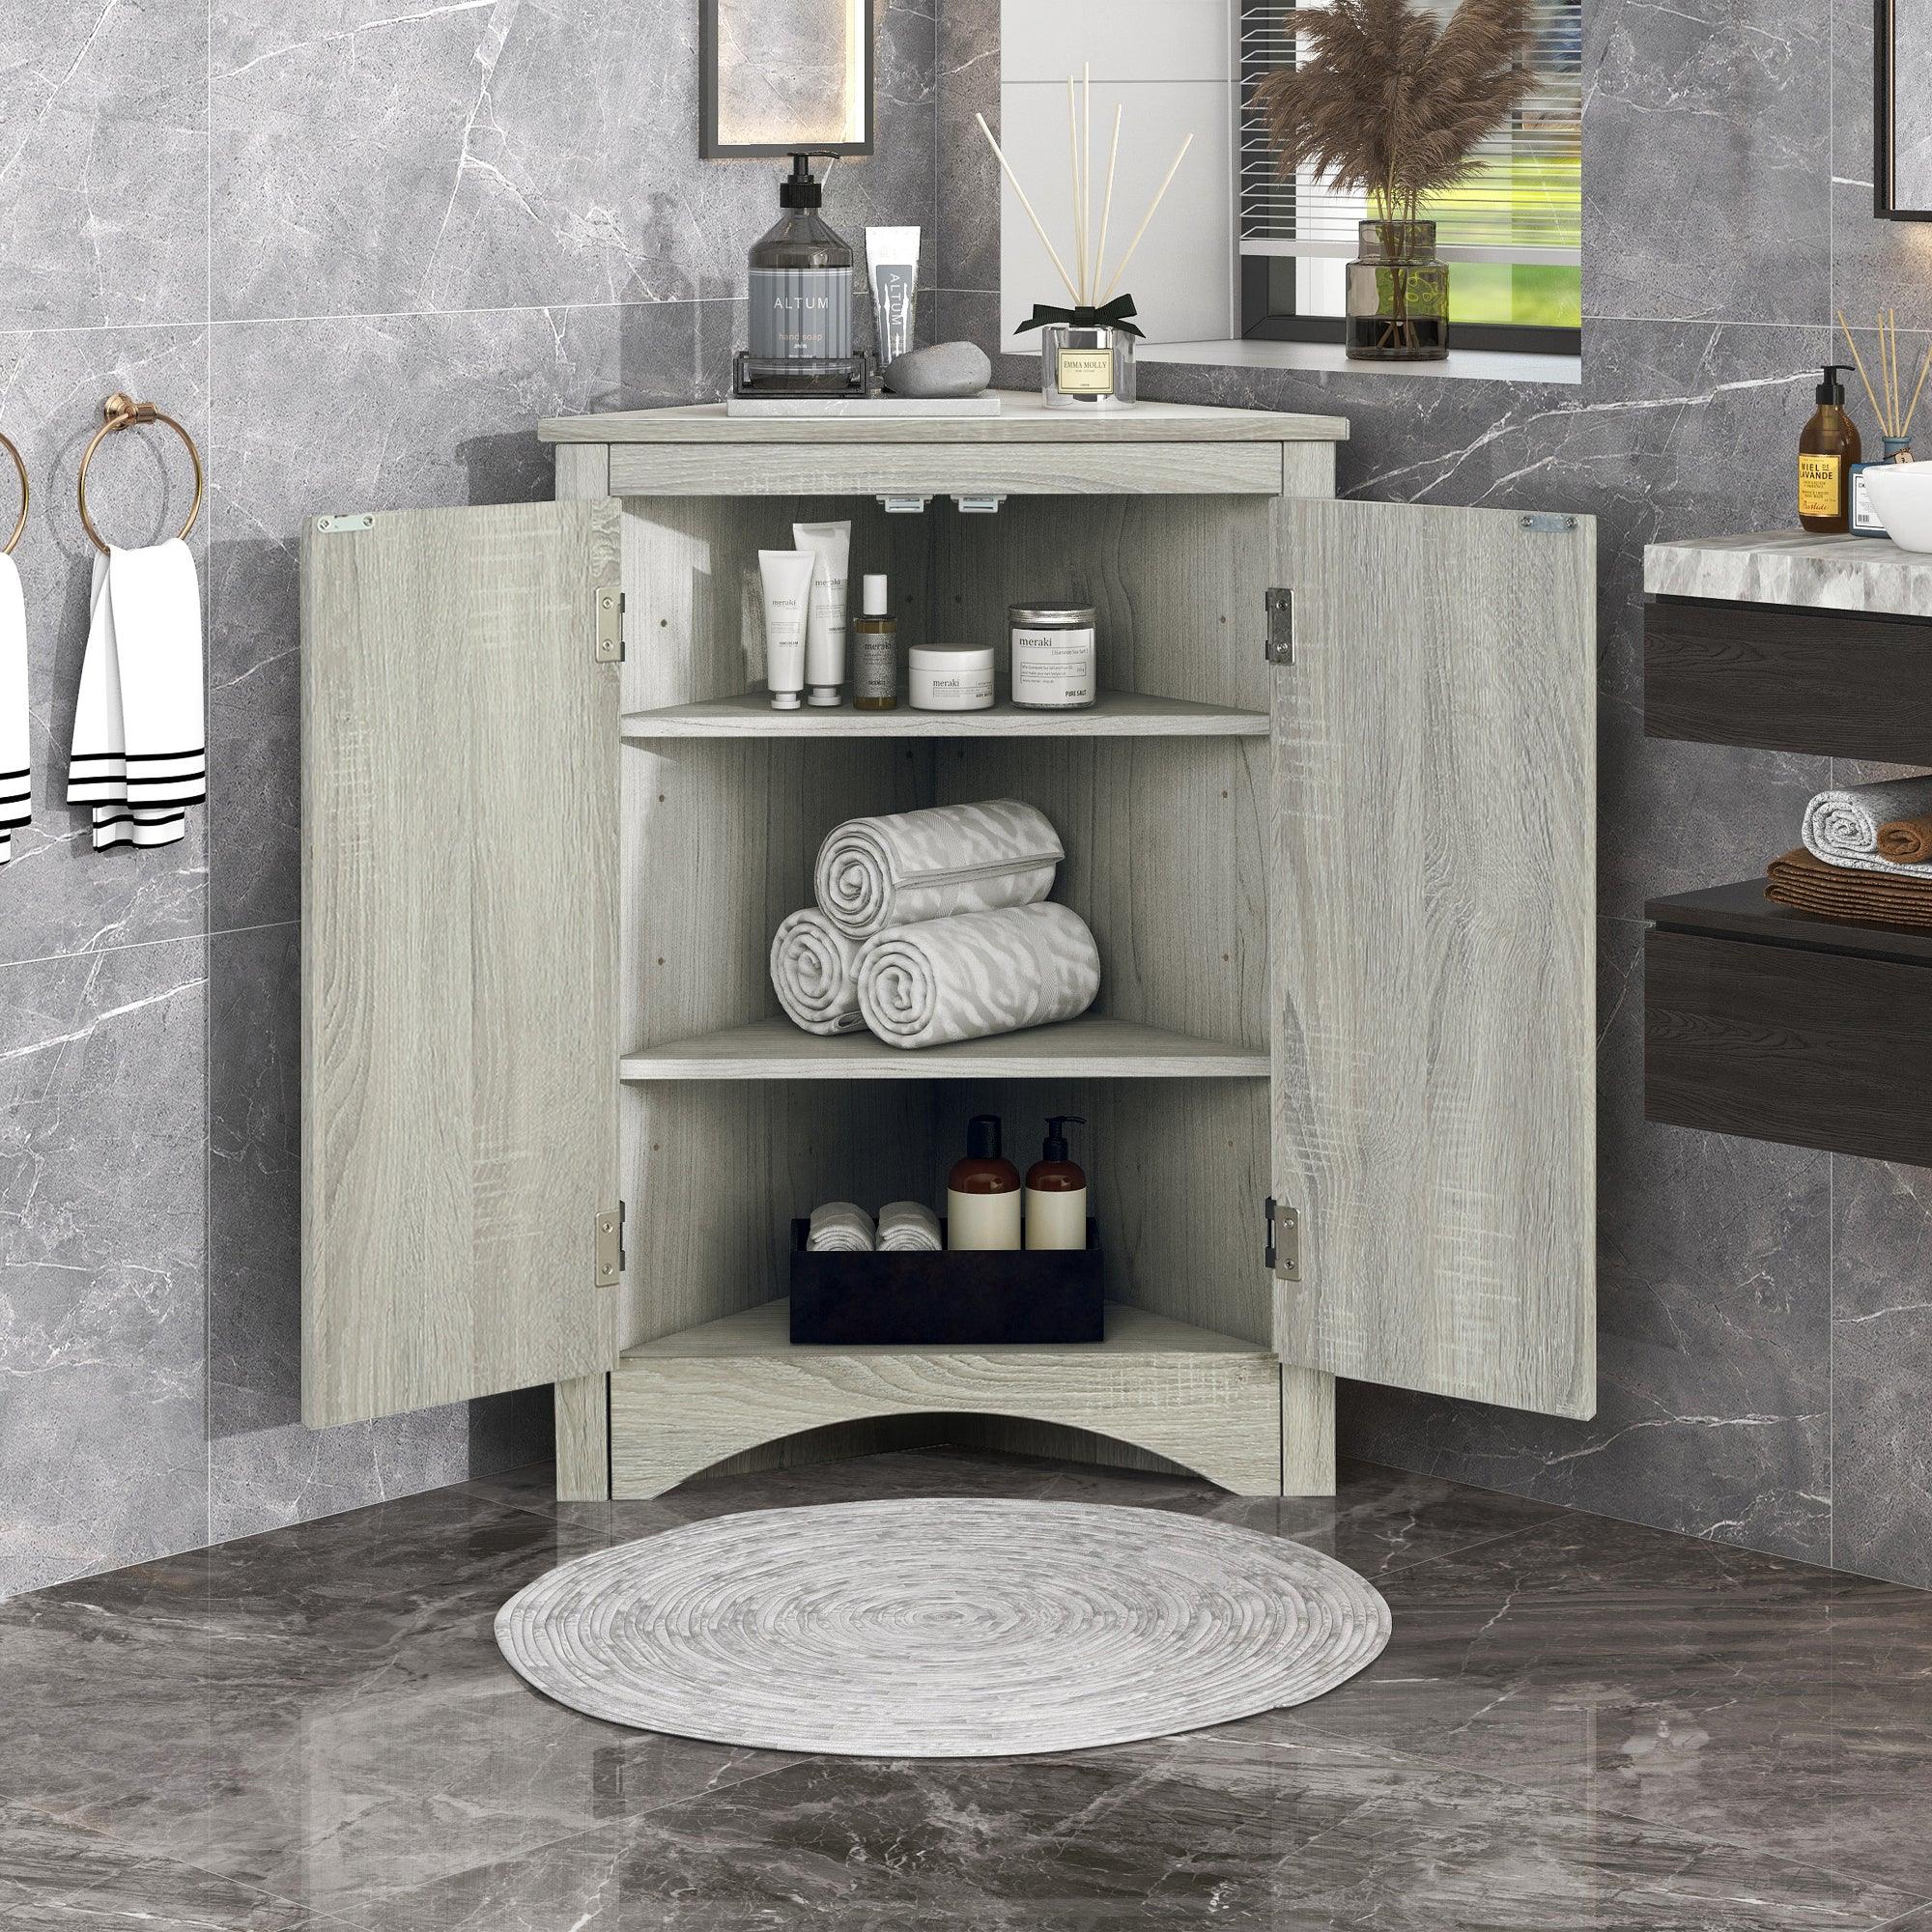 🆓🚛 Oak Triangle Bathroom Storage Cabinet With Adjustable Shelves, Freestanding Floor Cabinet for Home Kitchen